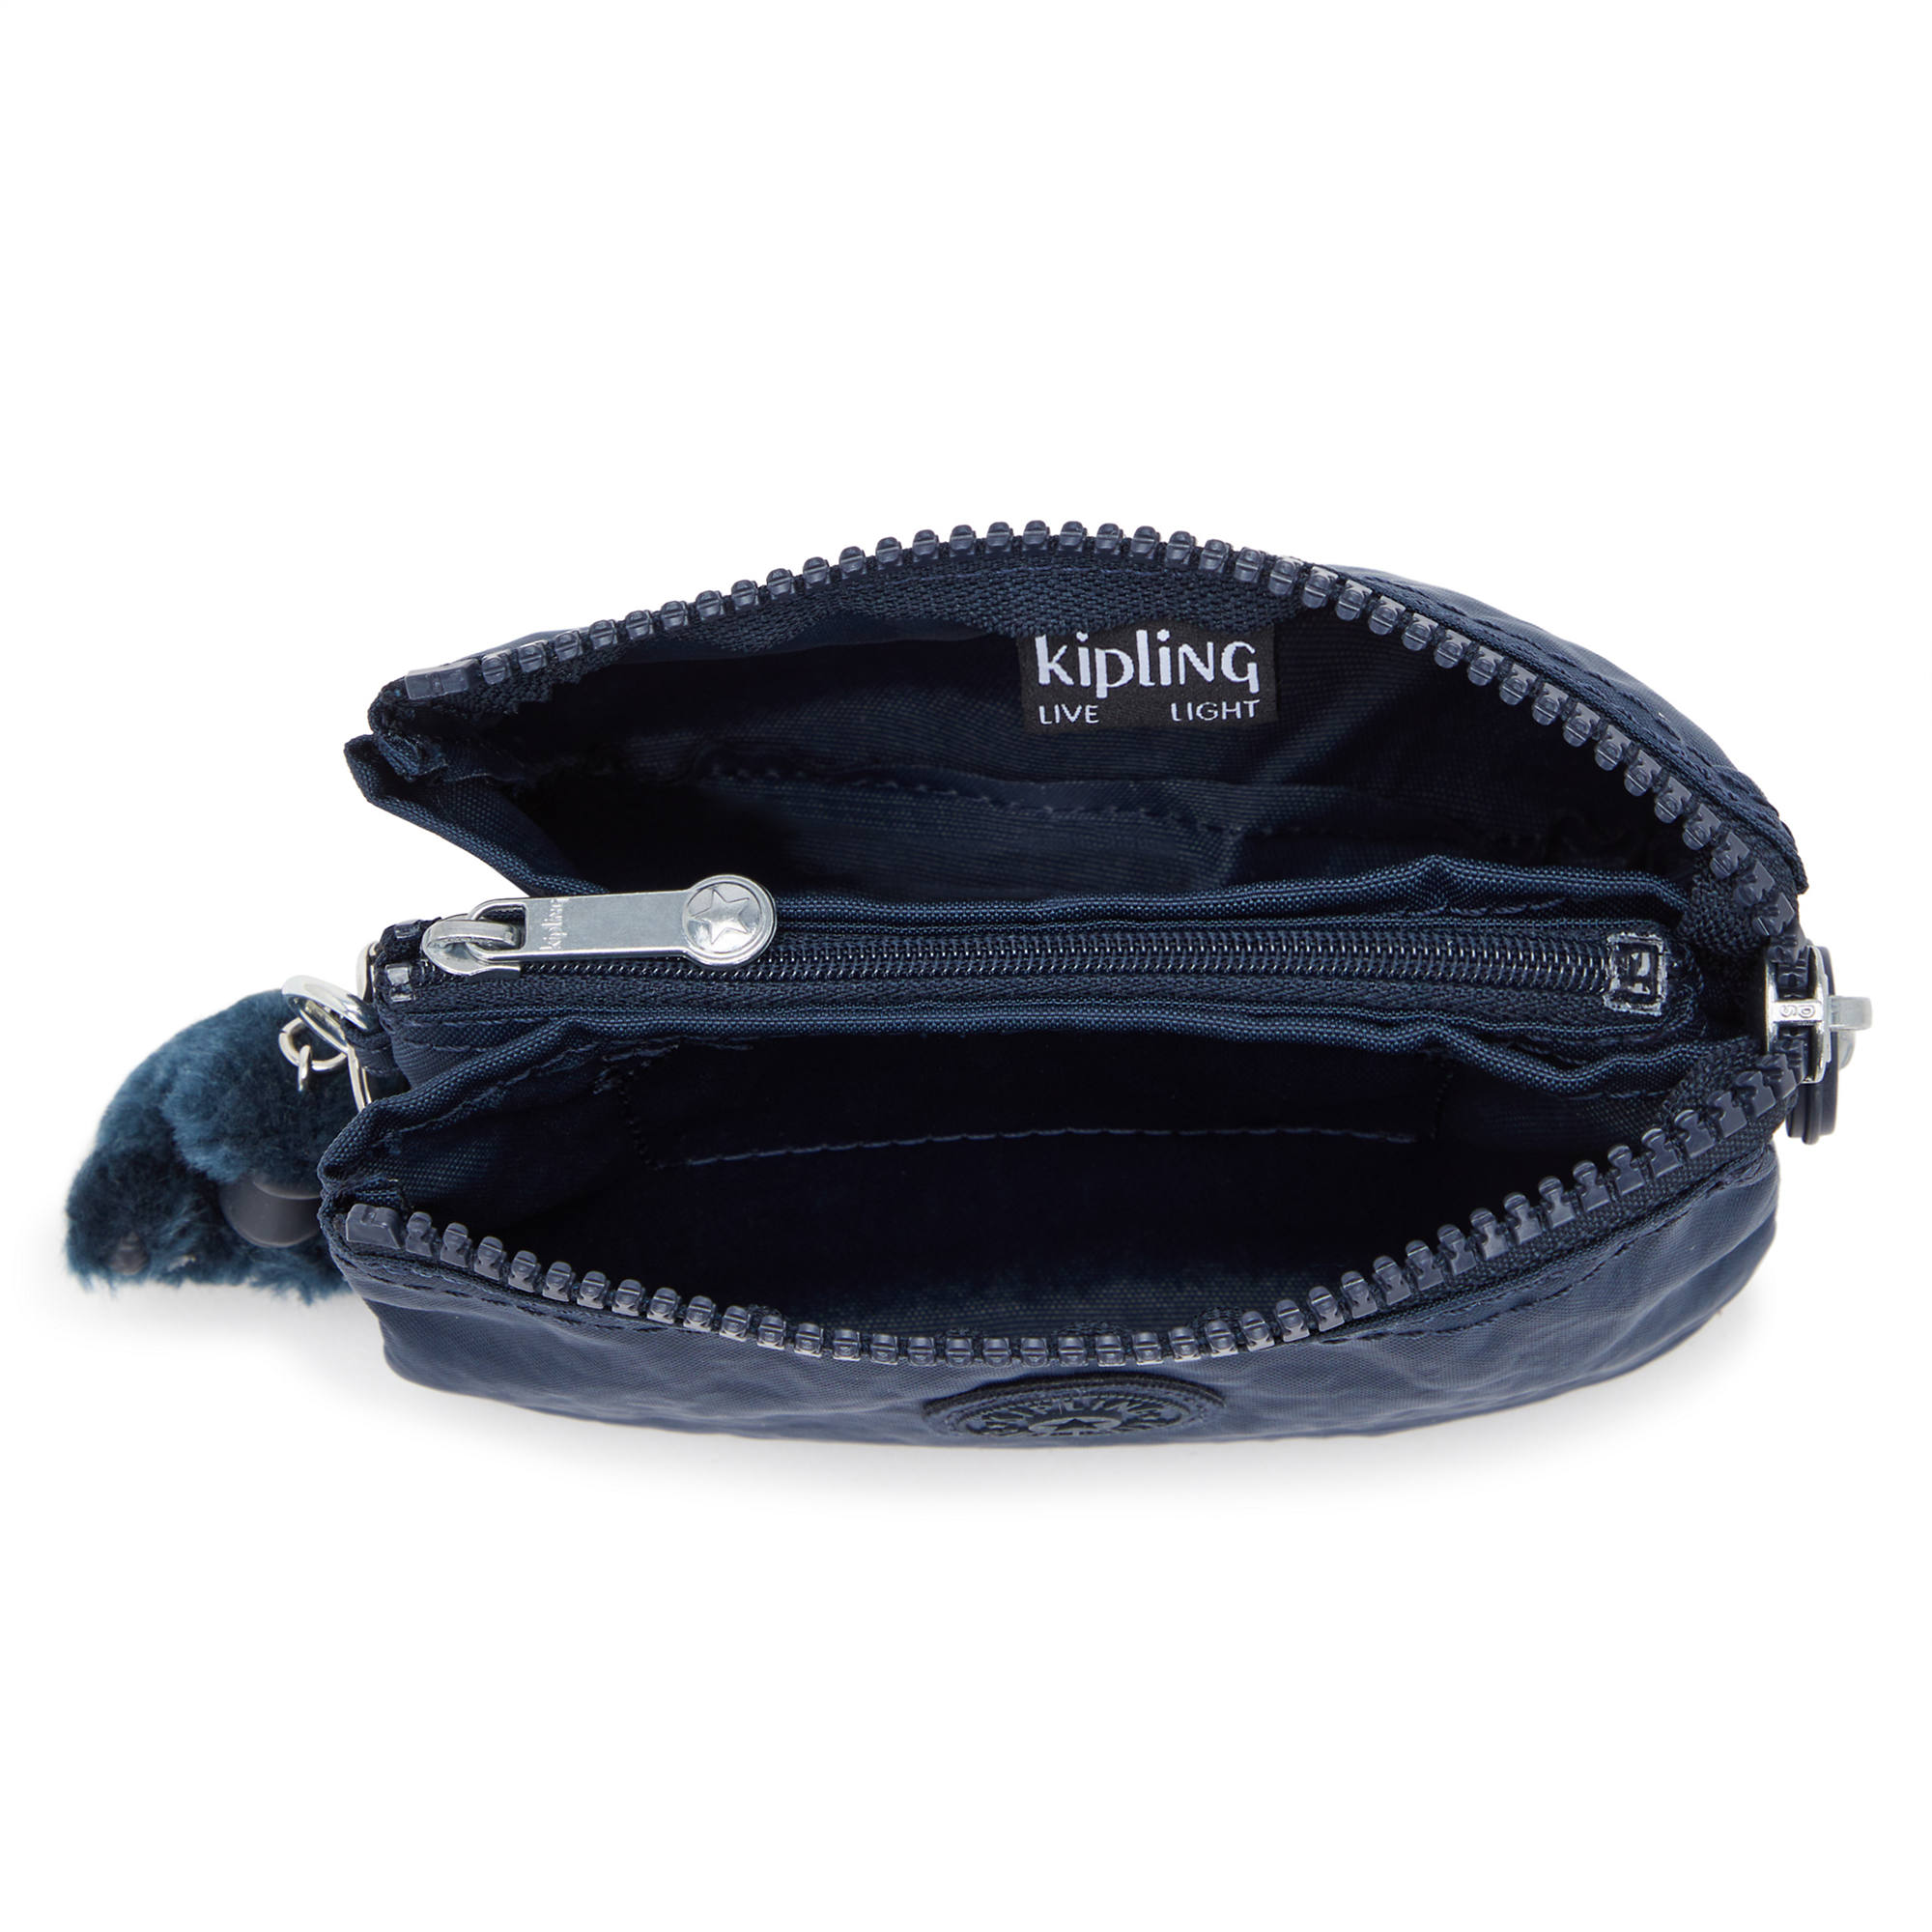 Kipling Women's Accessories Zipper Organizer Creativity Small